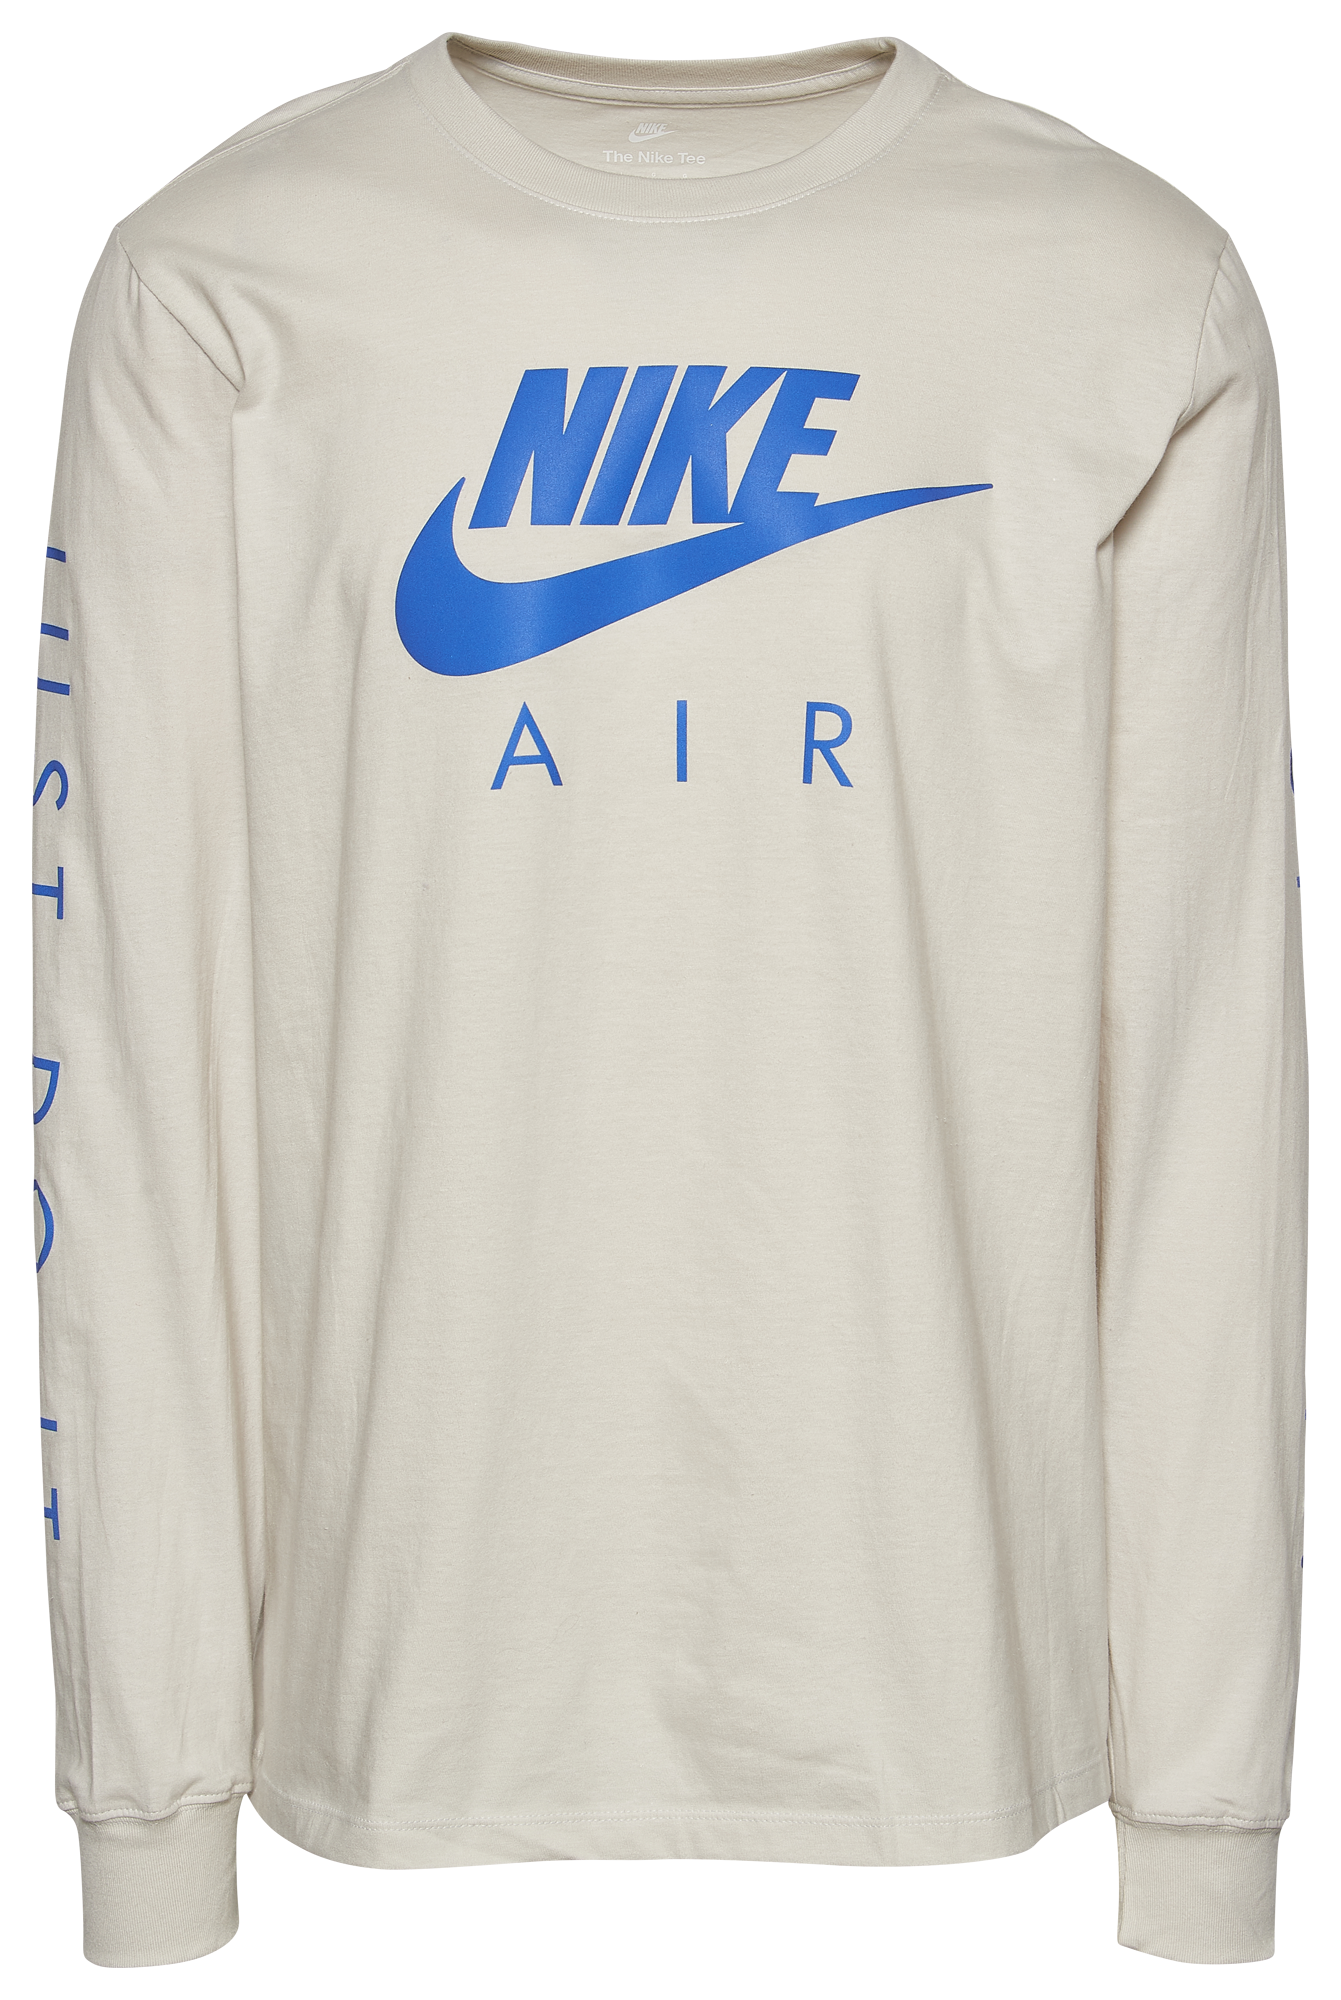 Nike Air Long Sleeve T-Shirt - Men's